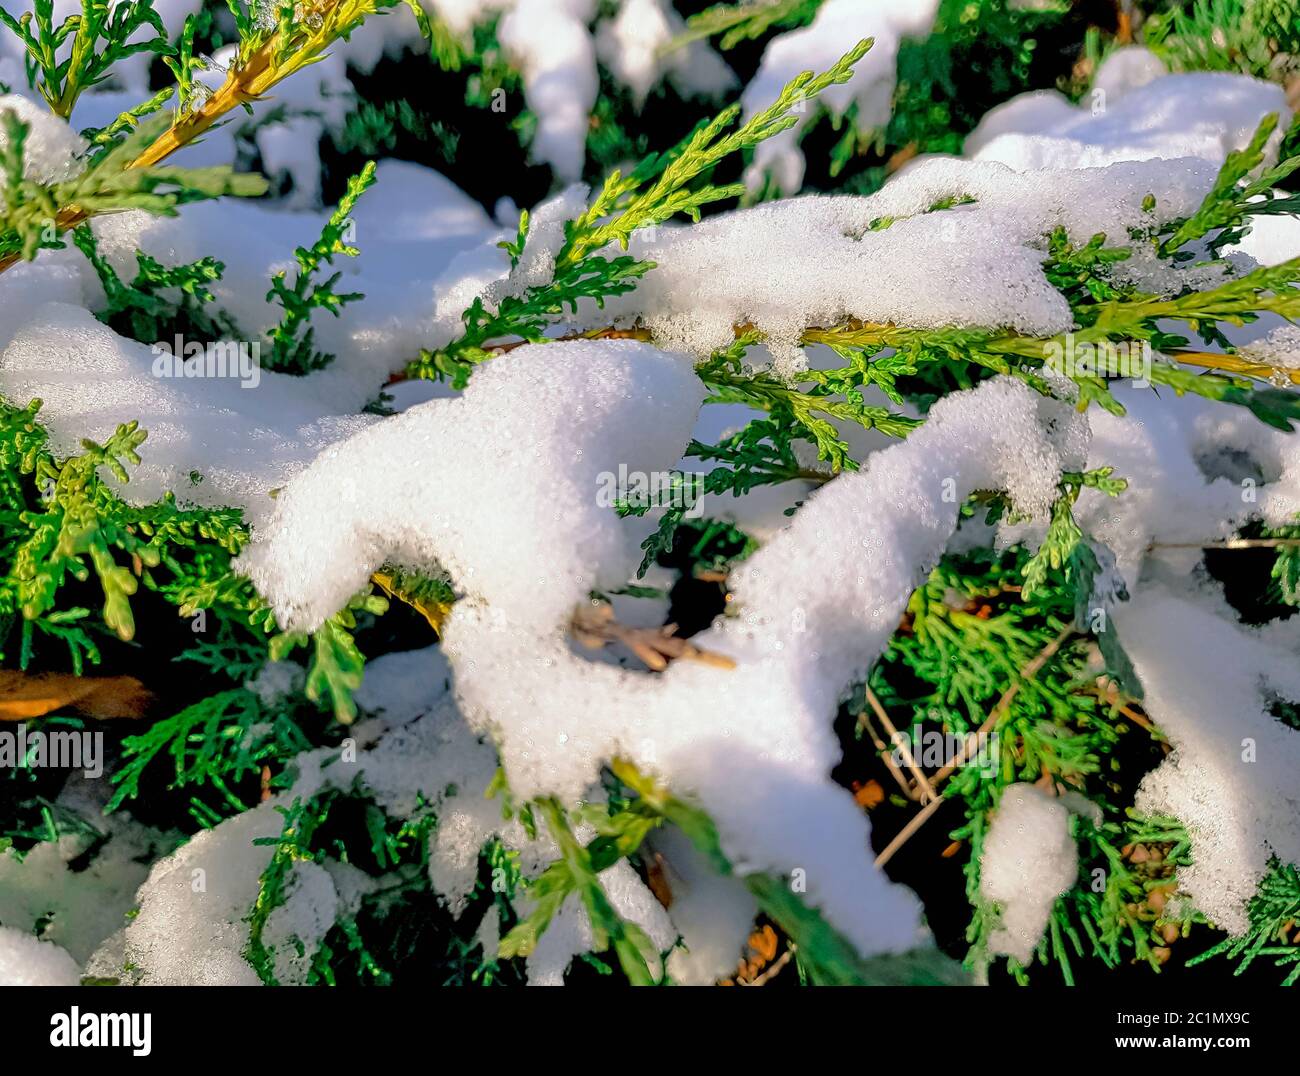 Taxus baccata (also known as common yew, English yew or European yew) covered with snow - Choczewo, Pomerania, Poland Stock Photo